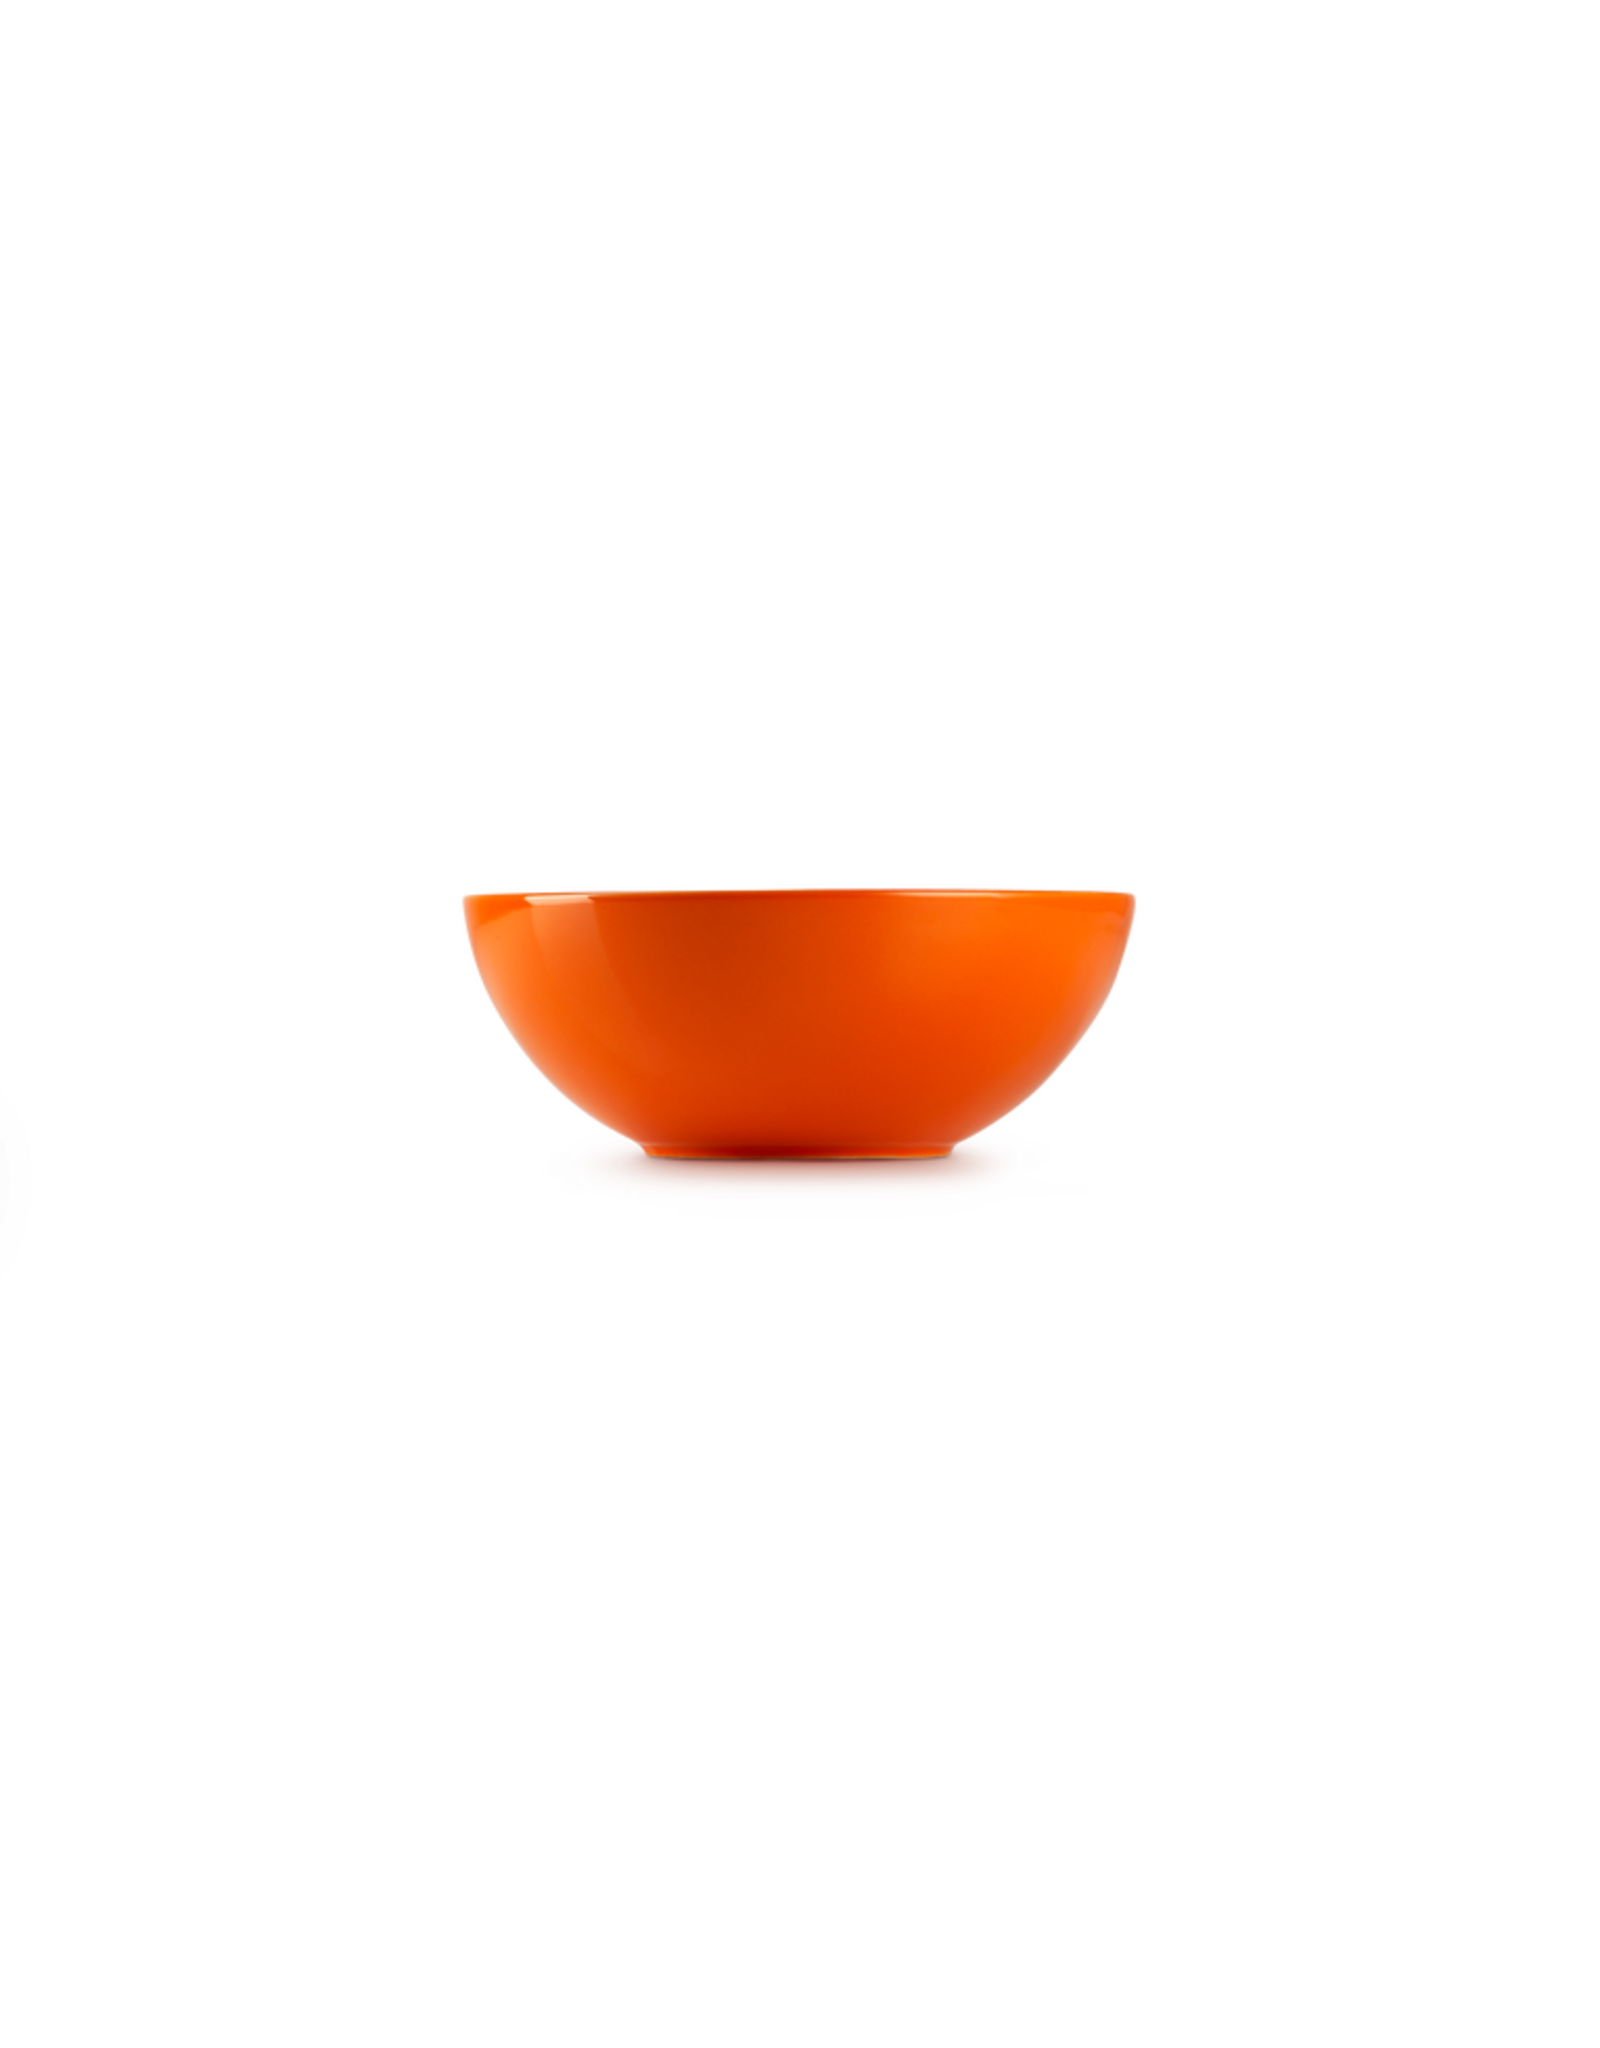 Le Creuset Ontbijtkom Oranjerood 0.65L 16cm